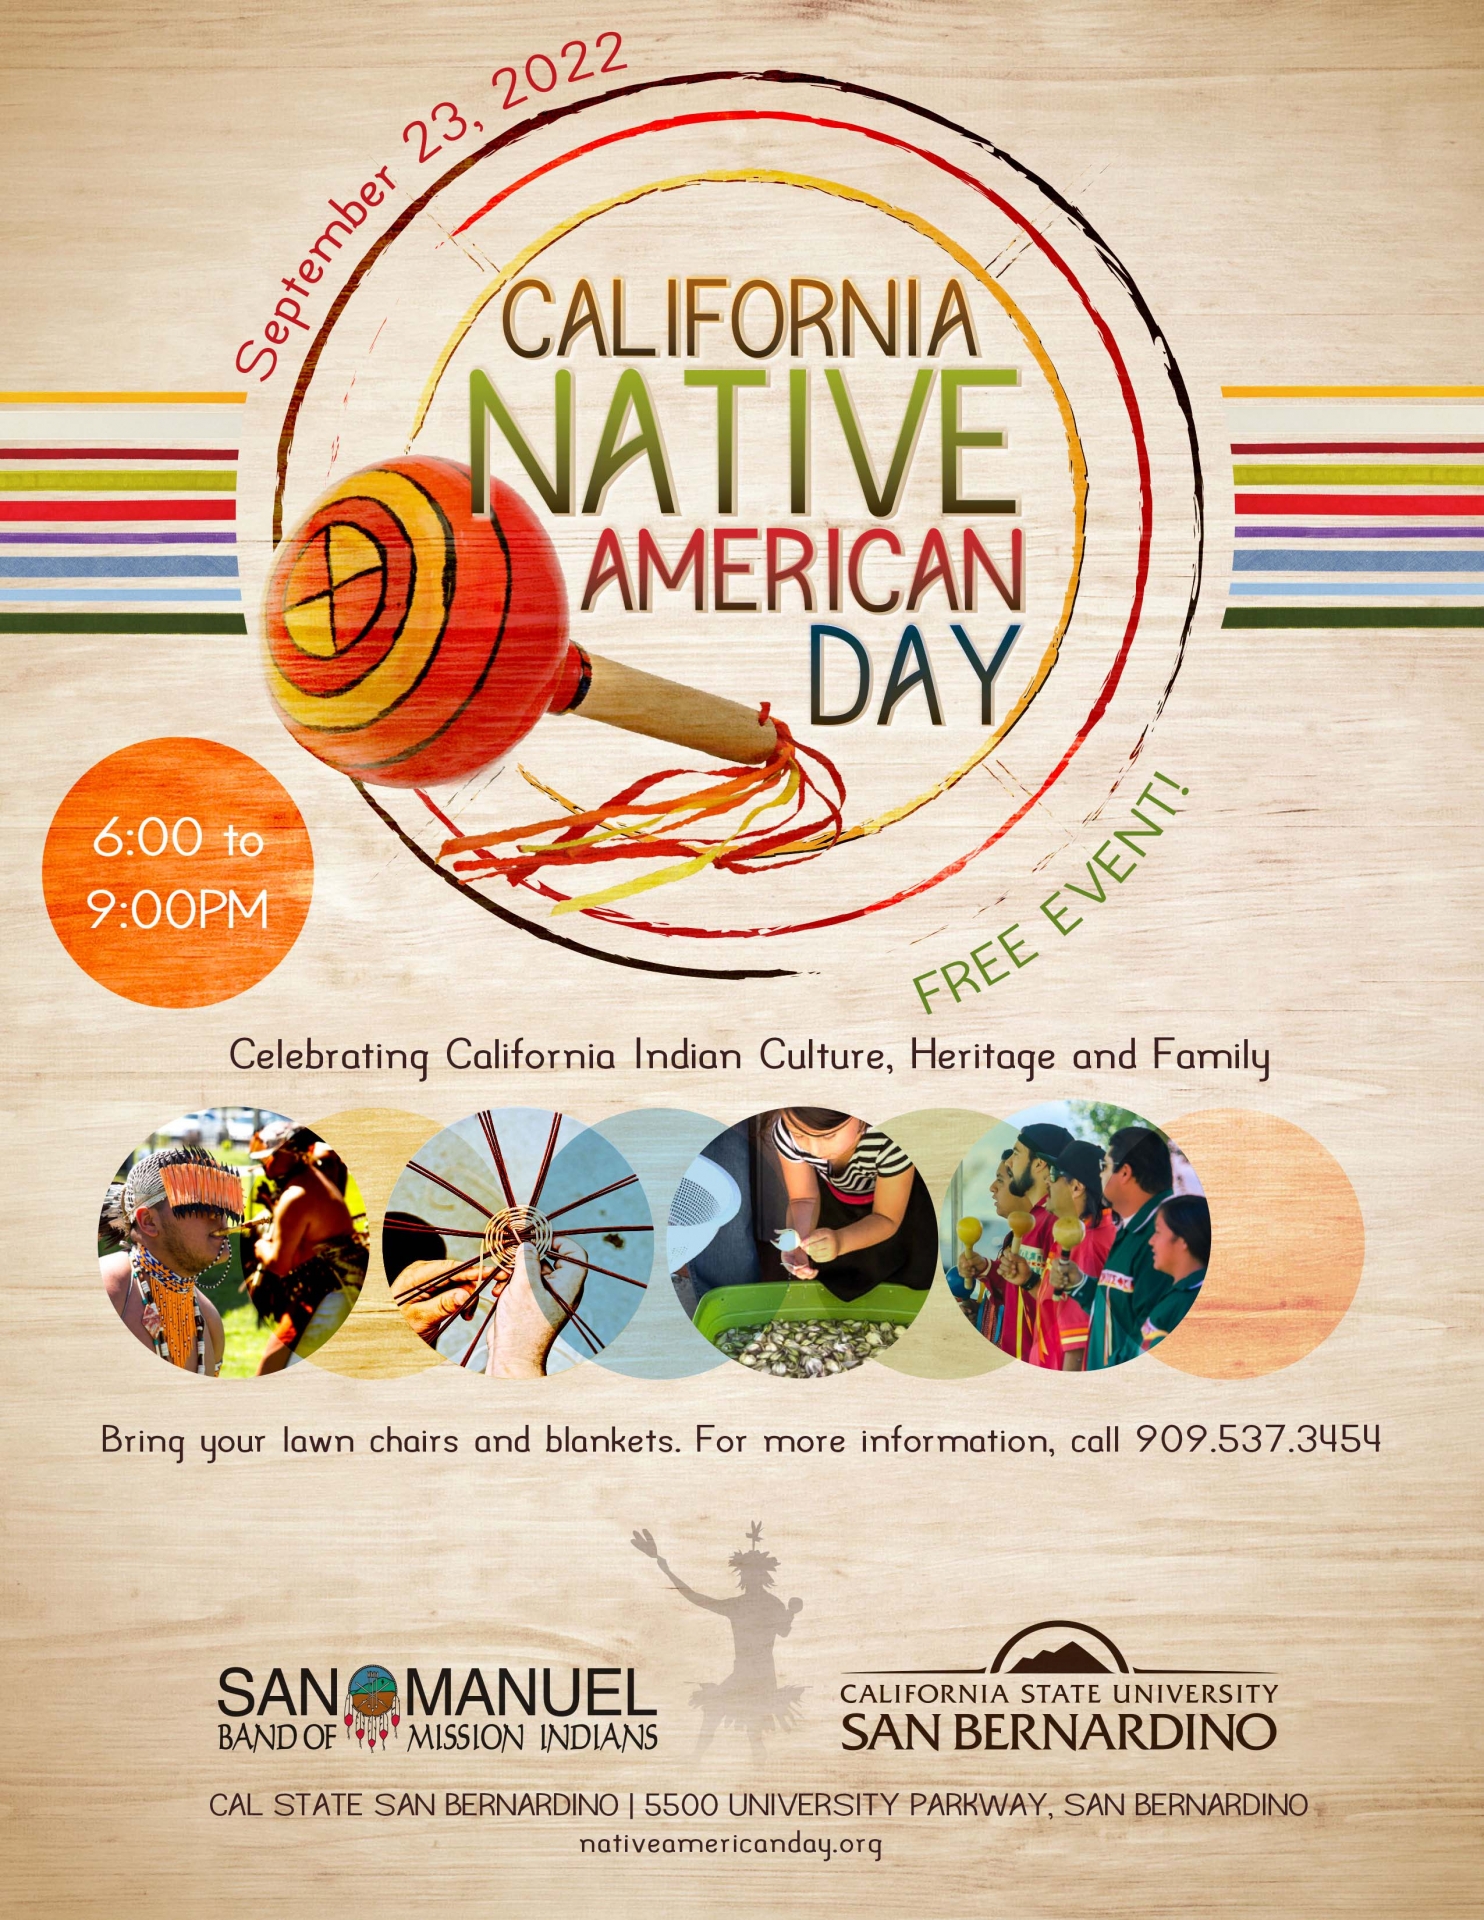 California Native American Day 2022 event flier.